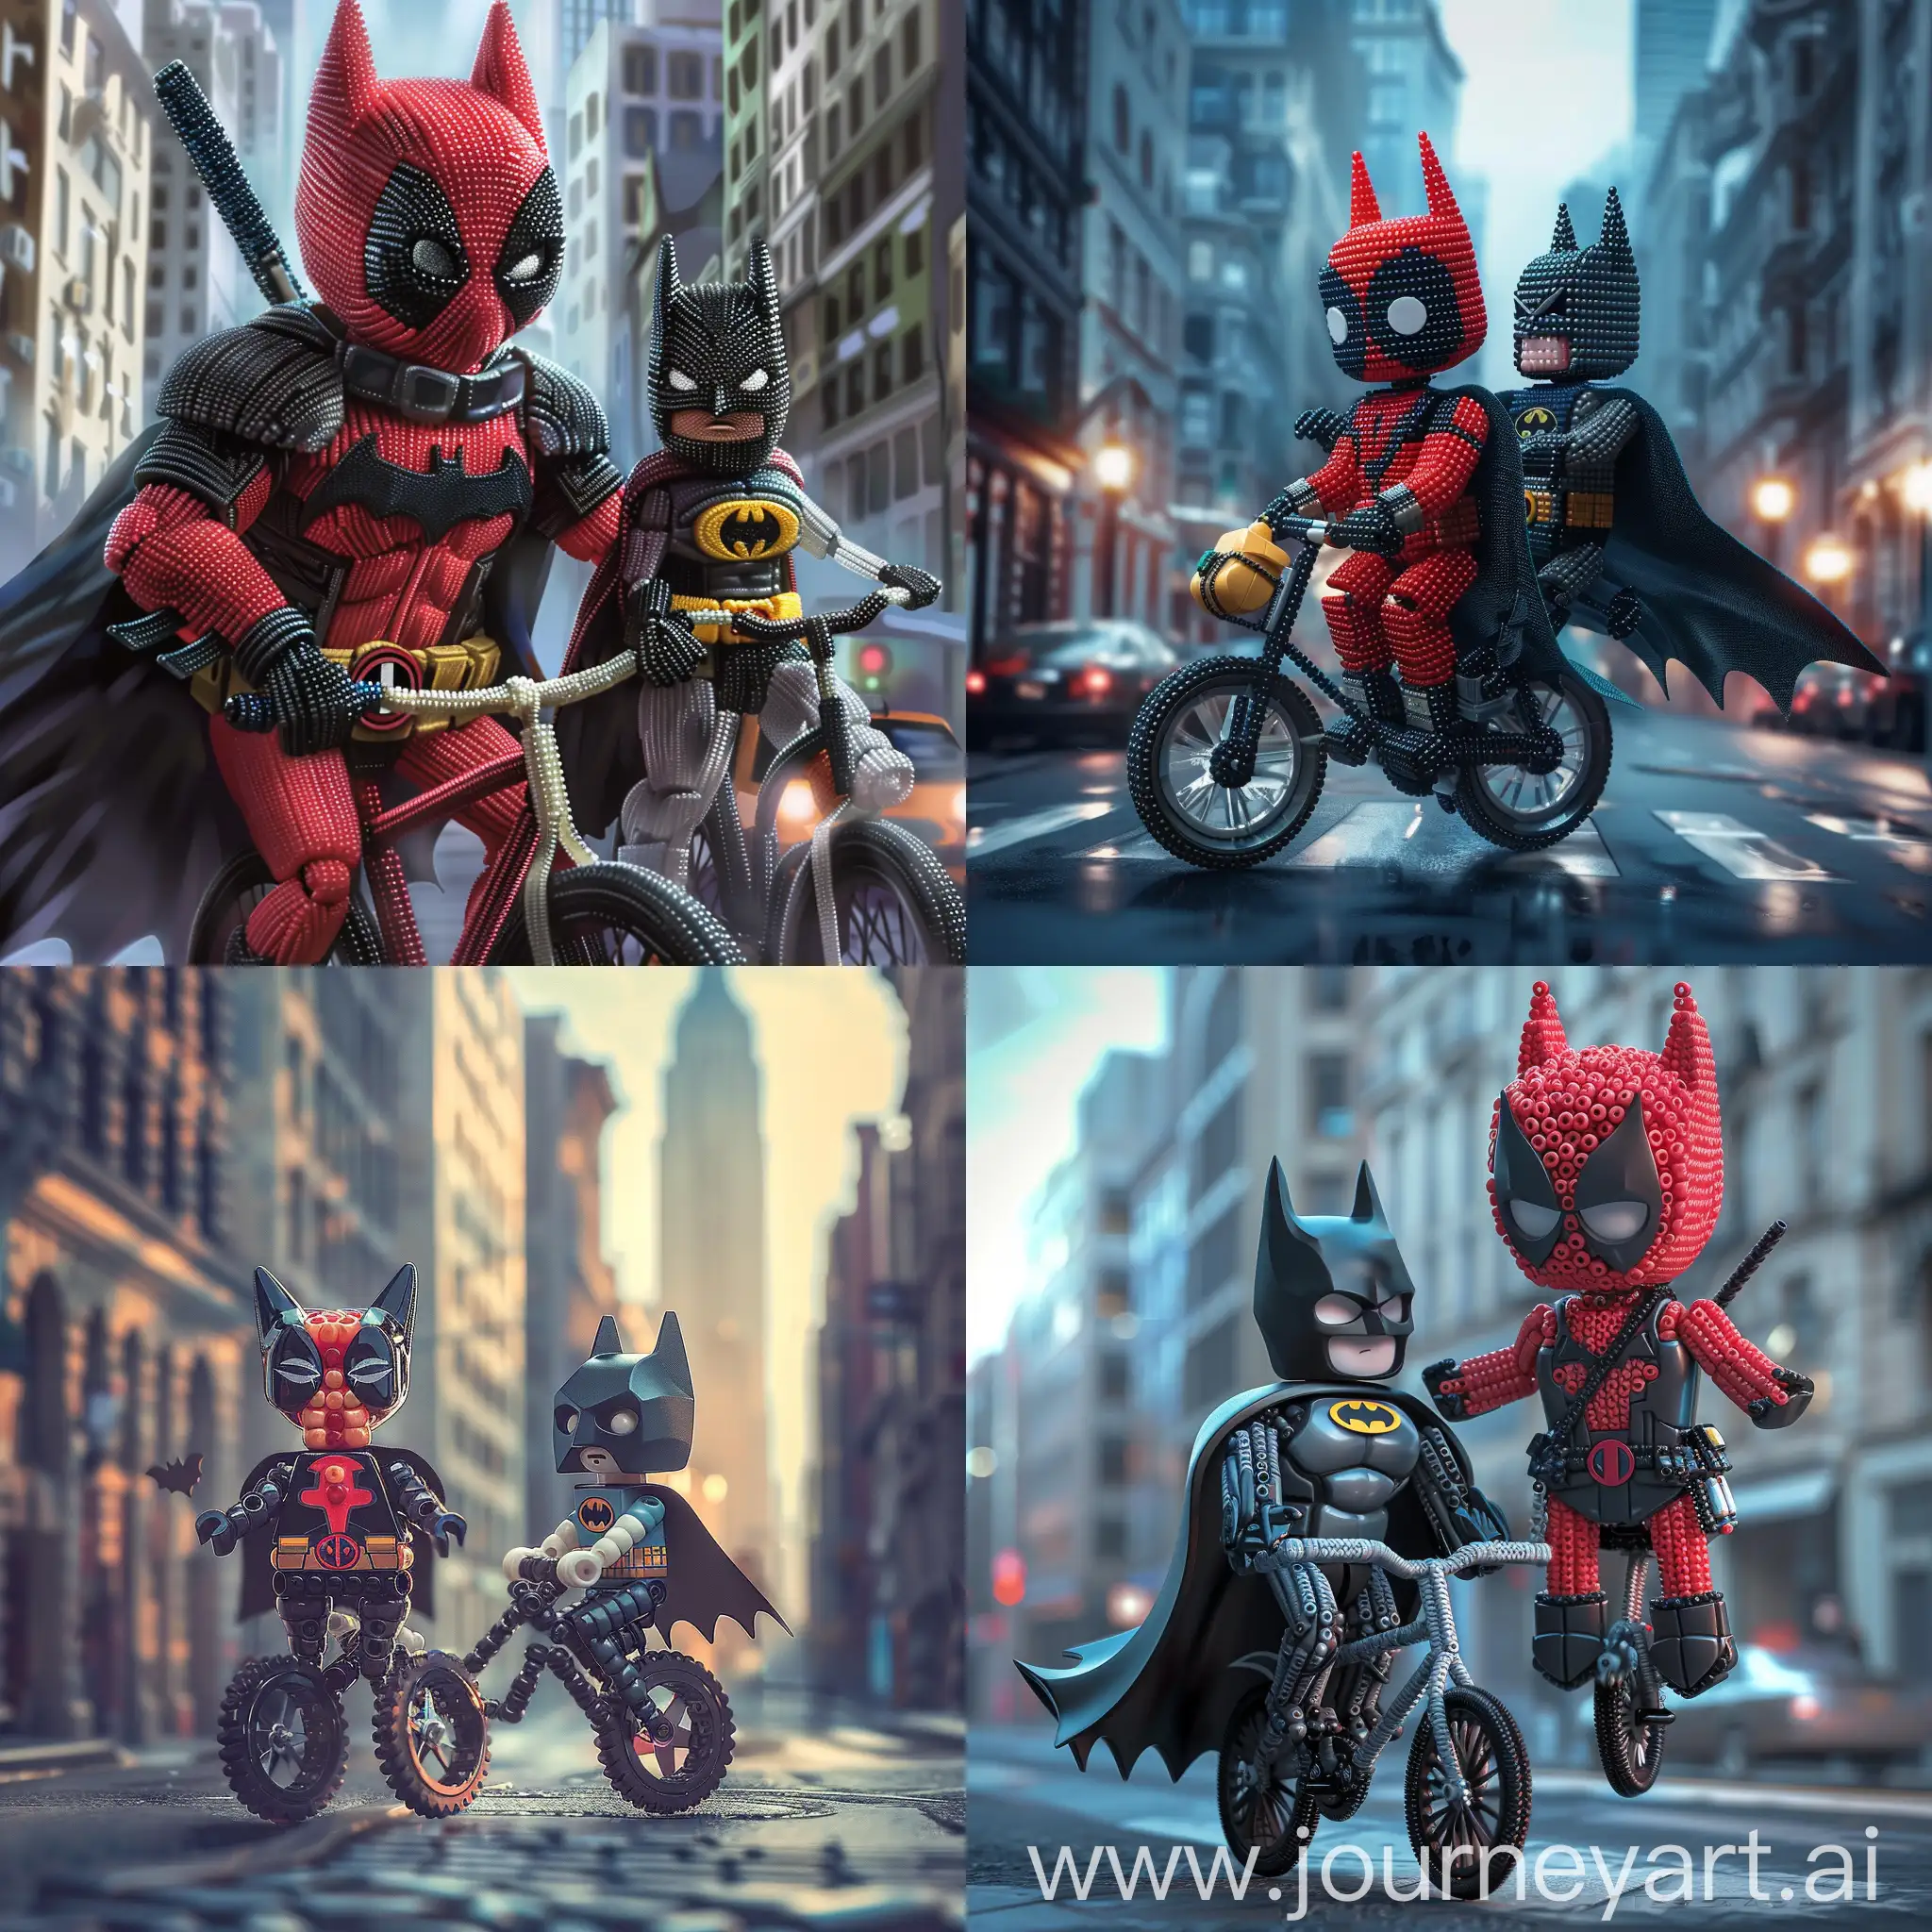 Batman-Riding-Bike-Through-City-Streets-at-Night